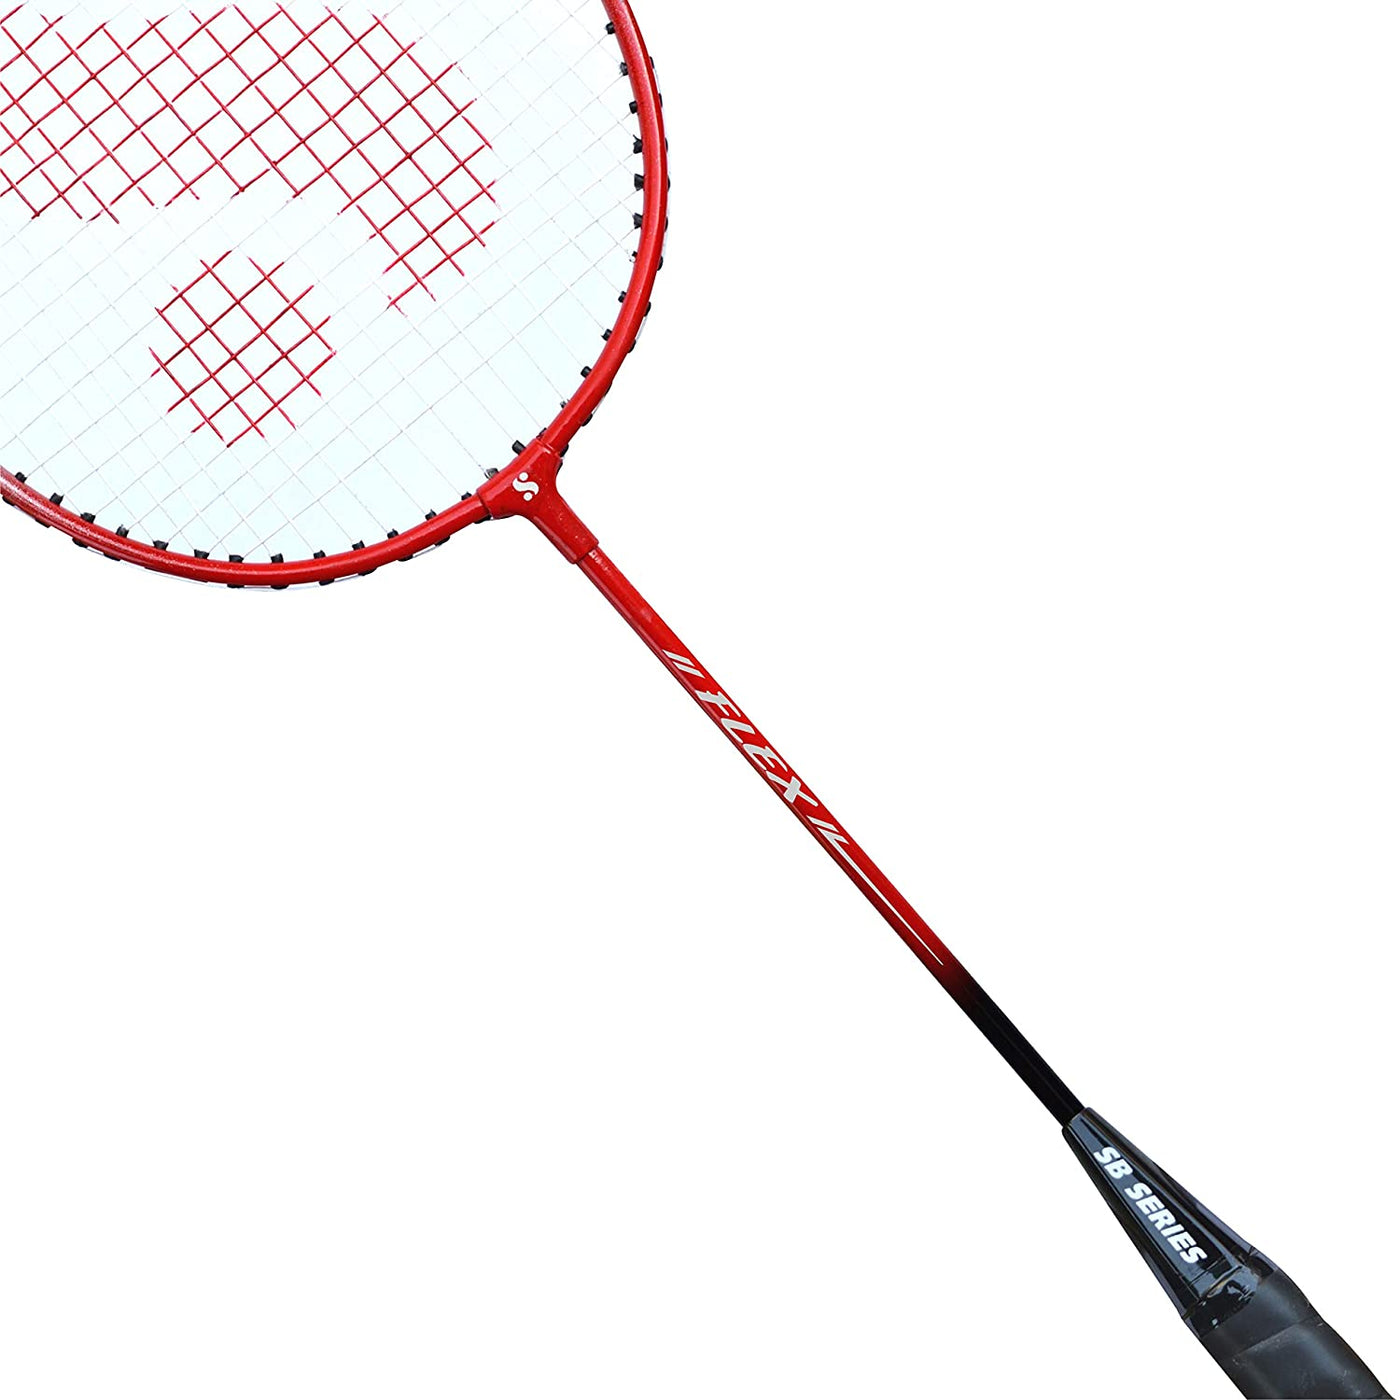 Silvers red yellow badminton racket set